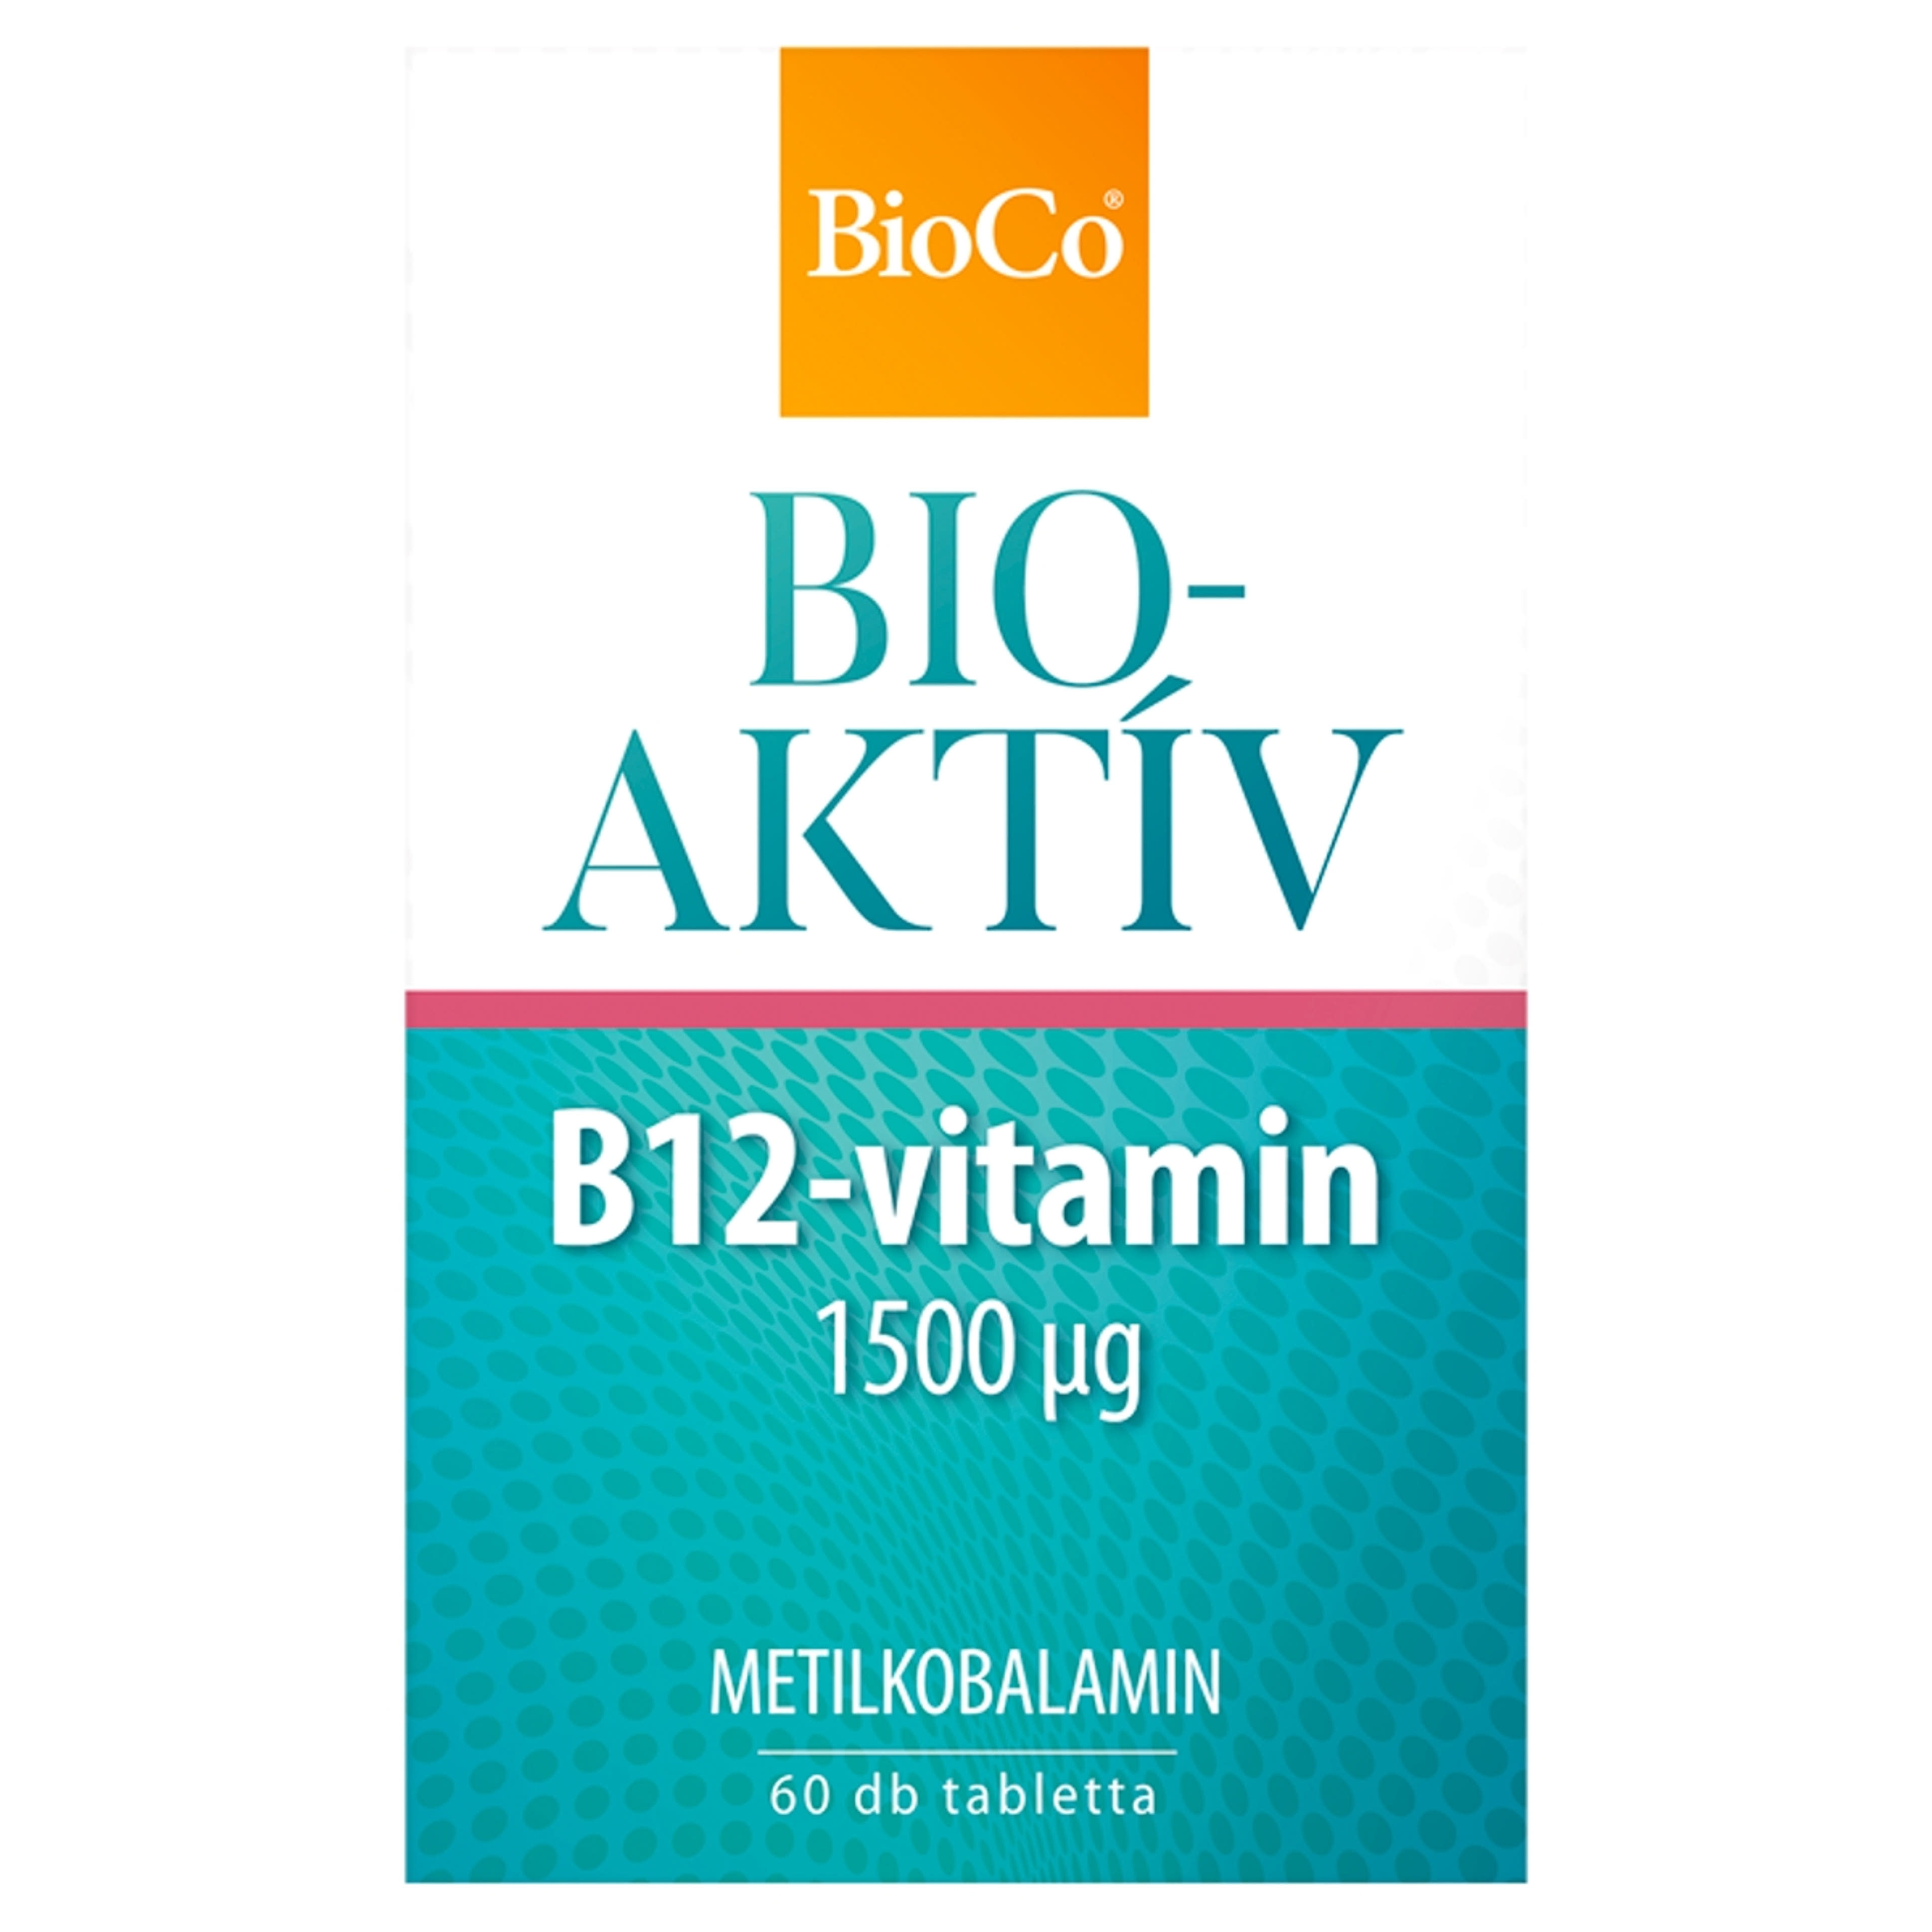 BioCo Bioaktív B12-vitamint 1500 MCG étrend-kiegészítő tabletta - 60 db